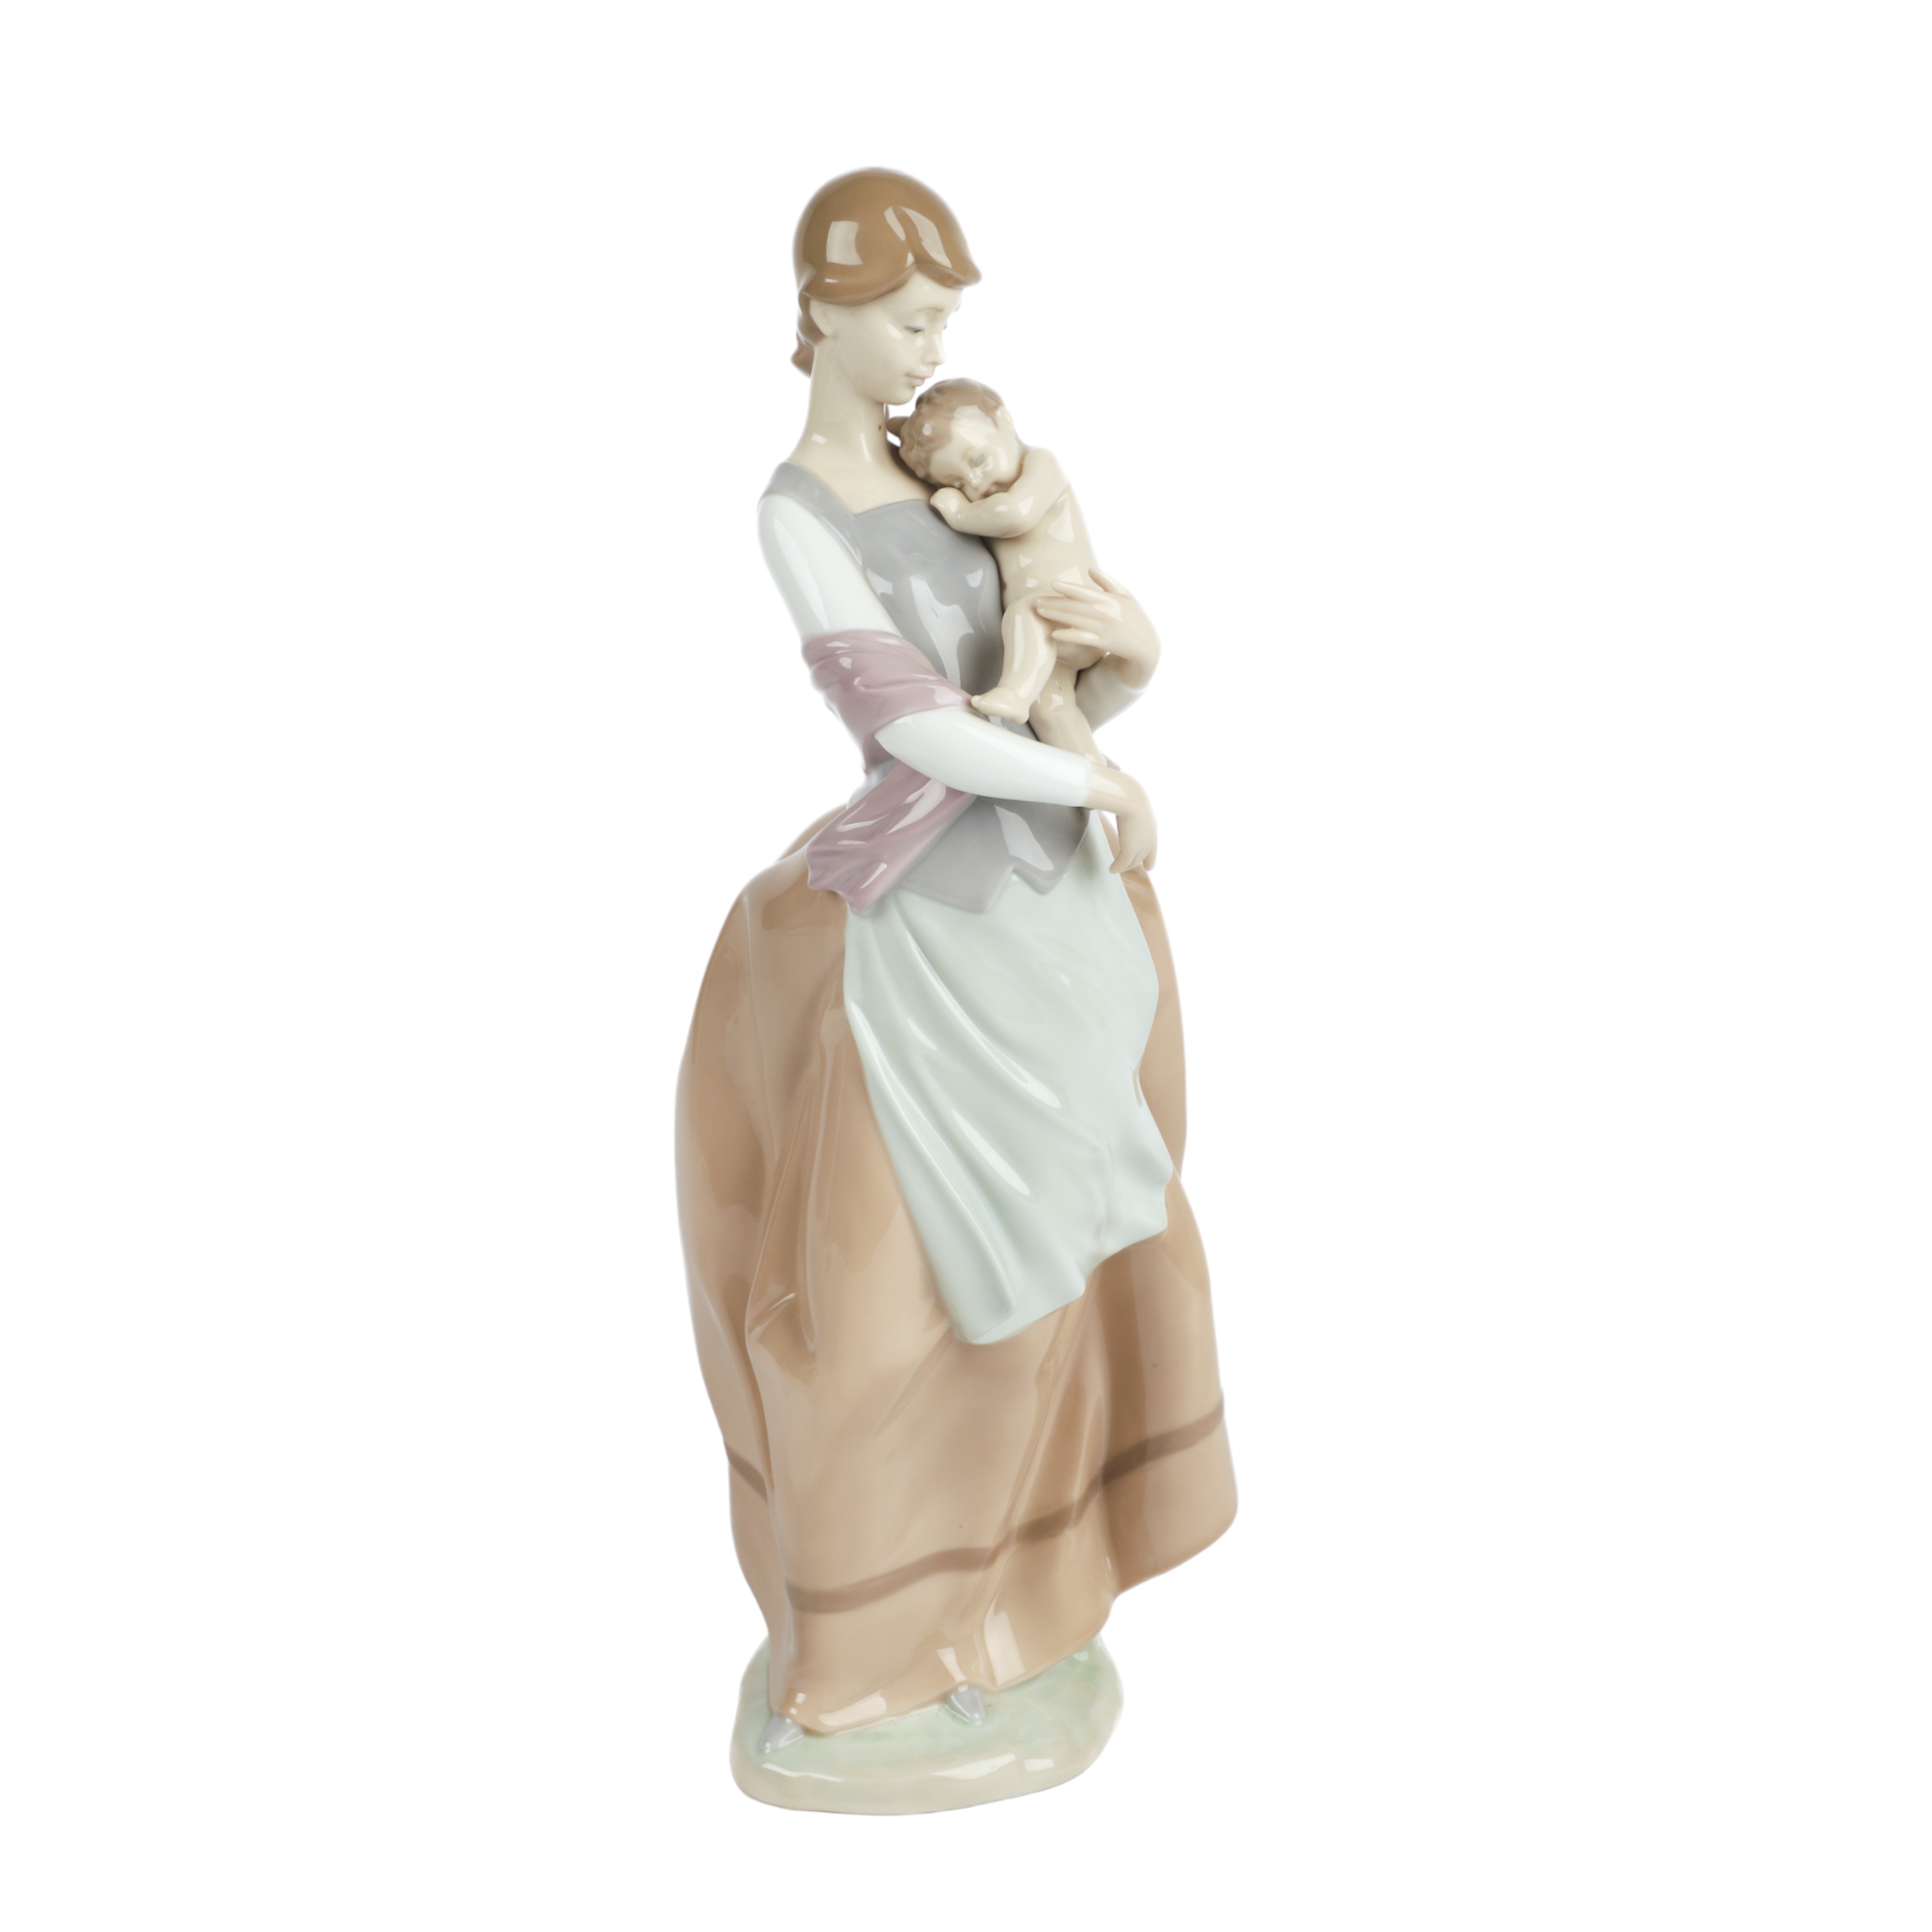 Lladro porcelain figurine, "Peaceful